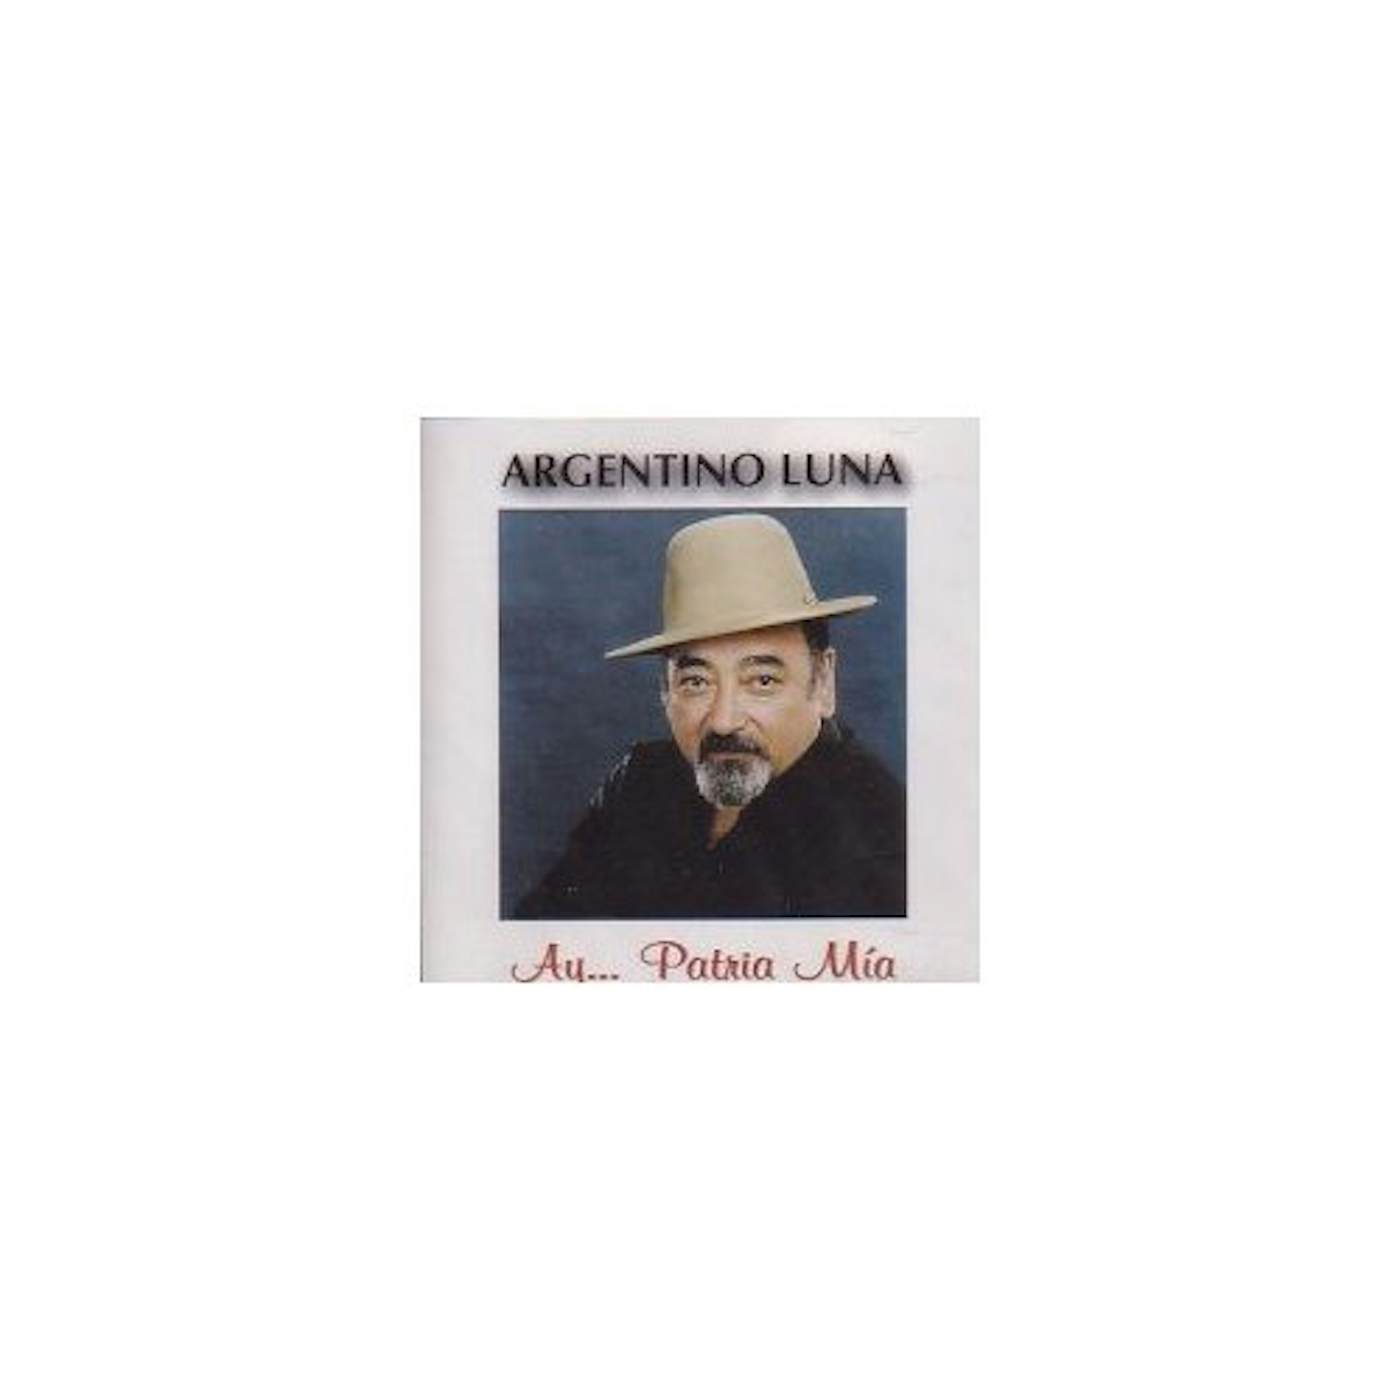 Argentino Luna AY PATRIA MIA CD